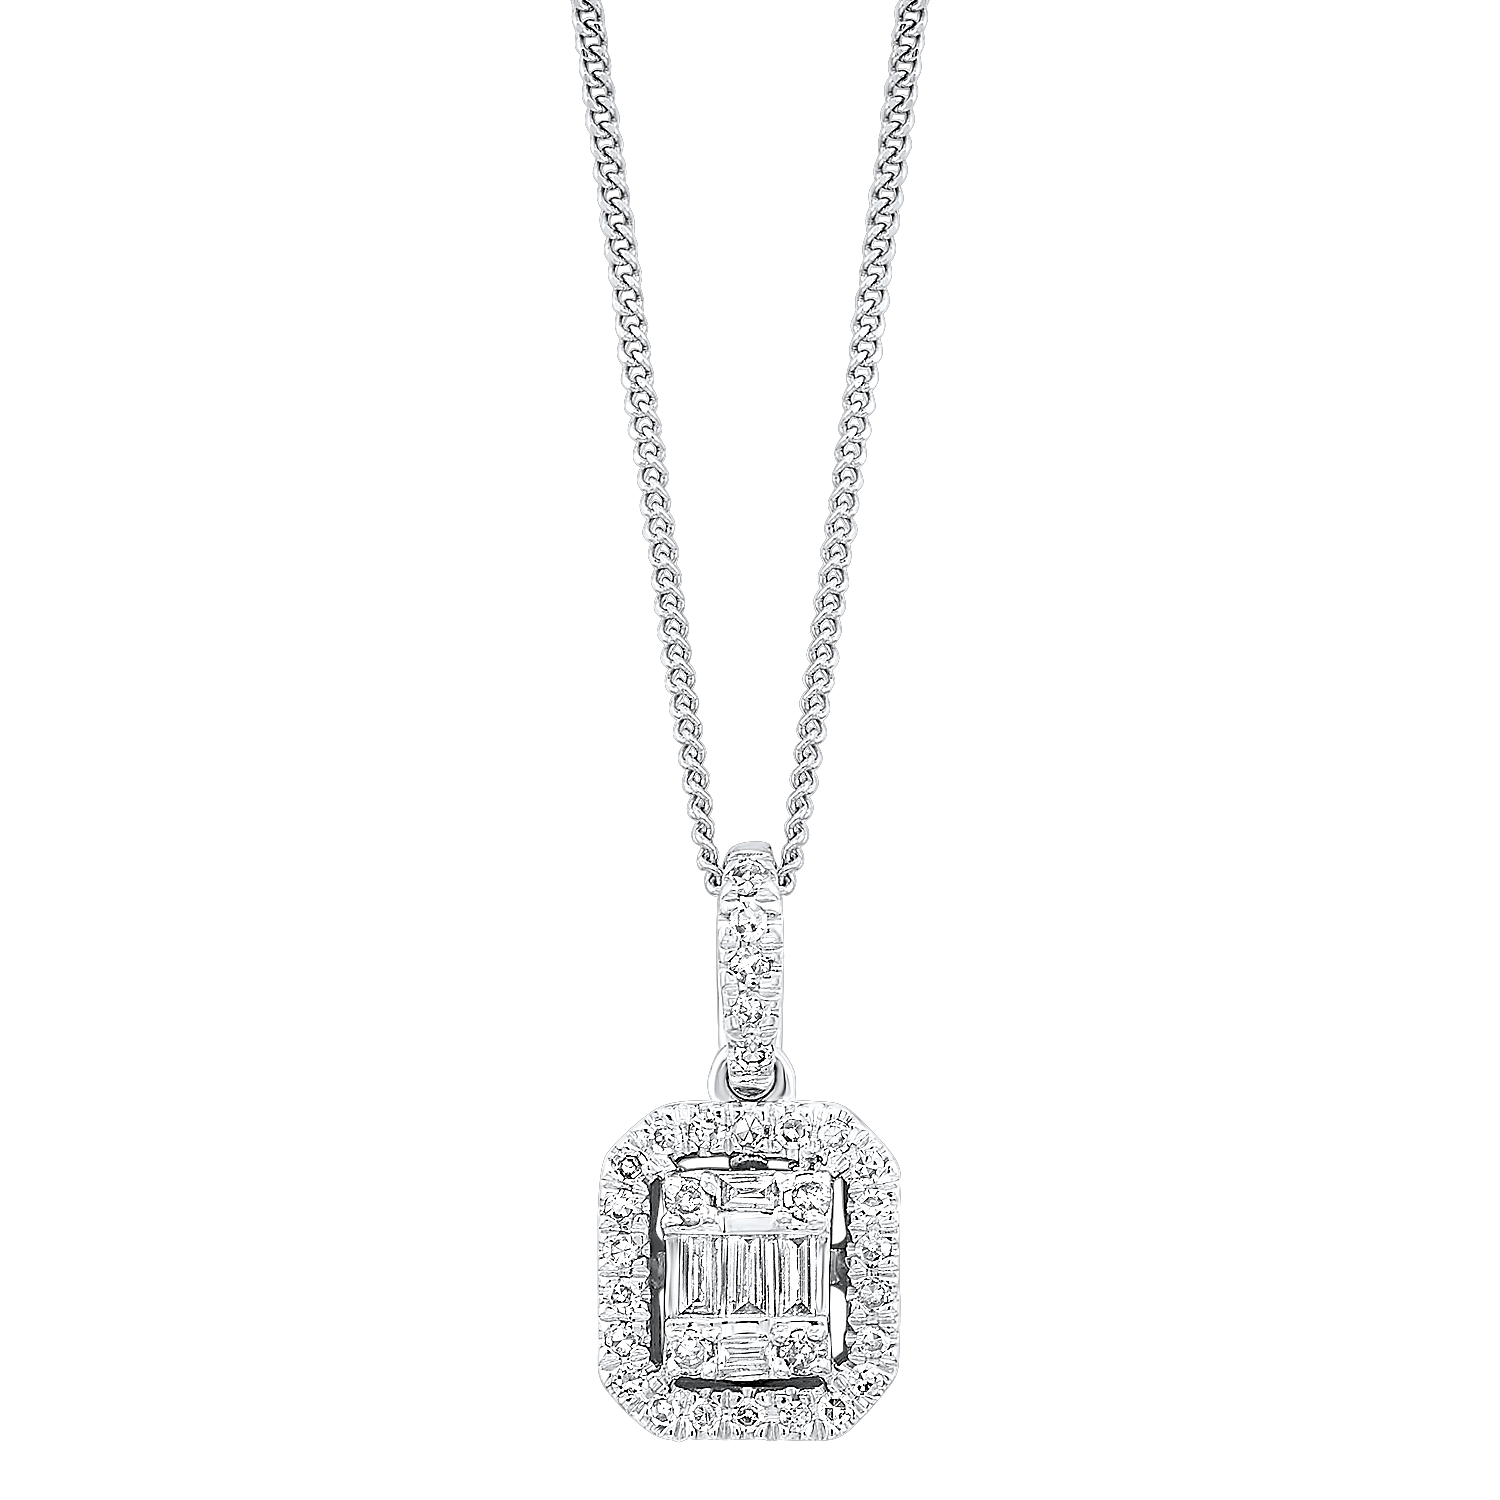 BW James Jewelers Pendant 16 Page Christmas Catalog Offer 14K Diamond Pendant 1/4ctw